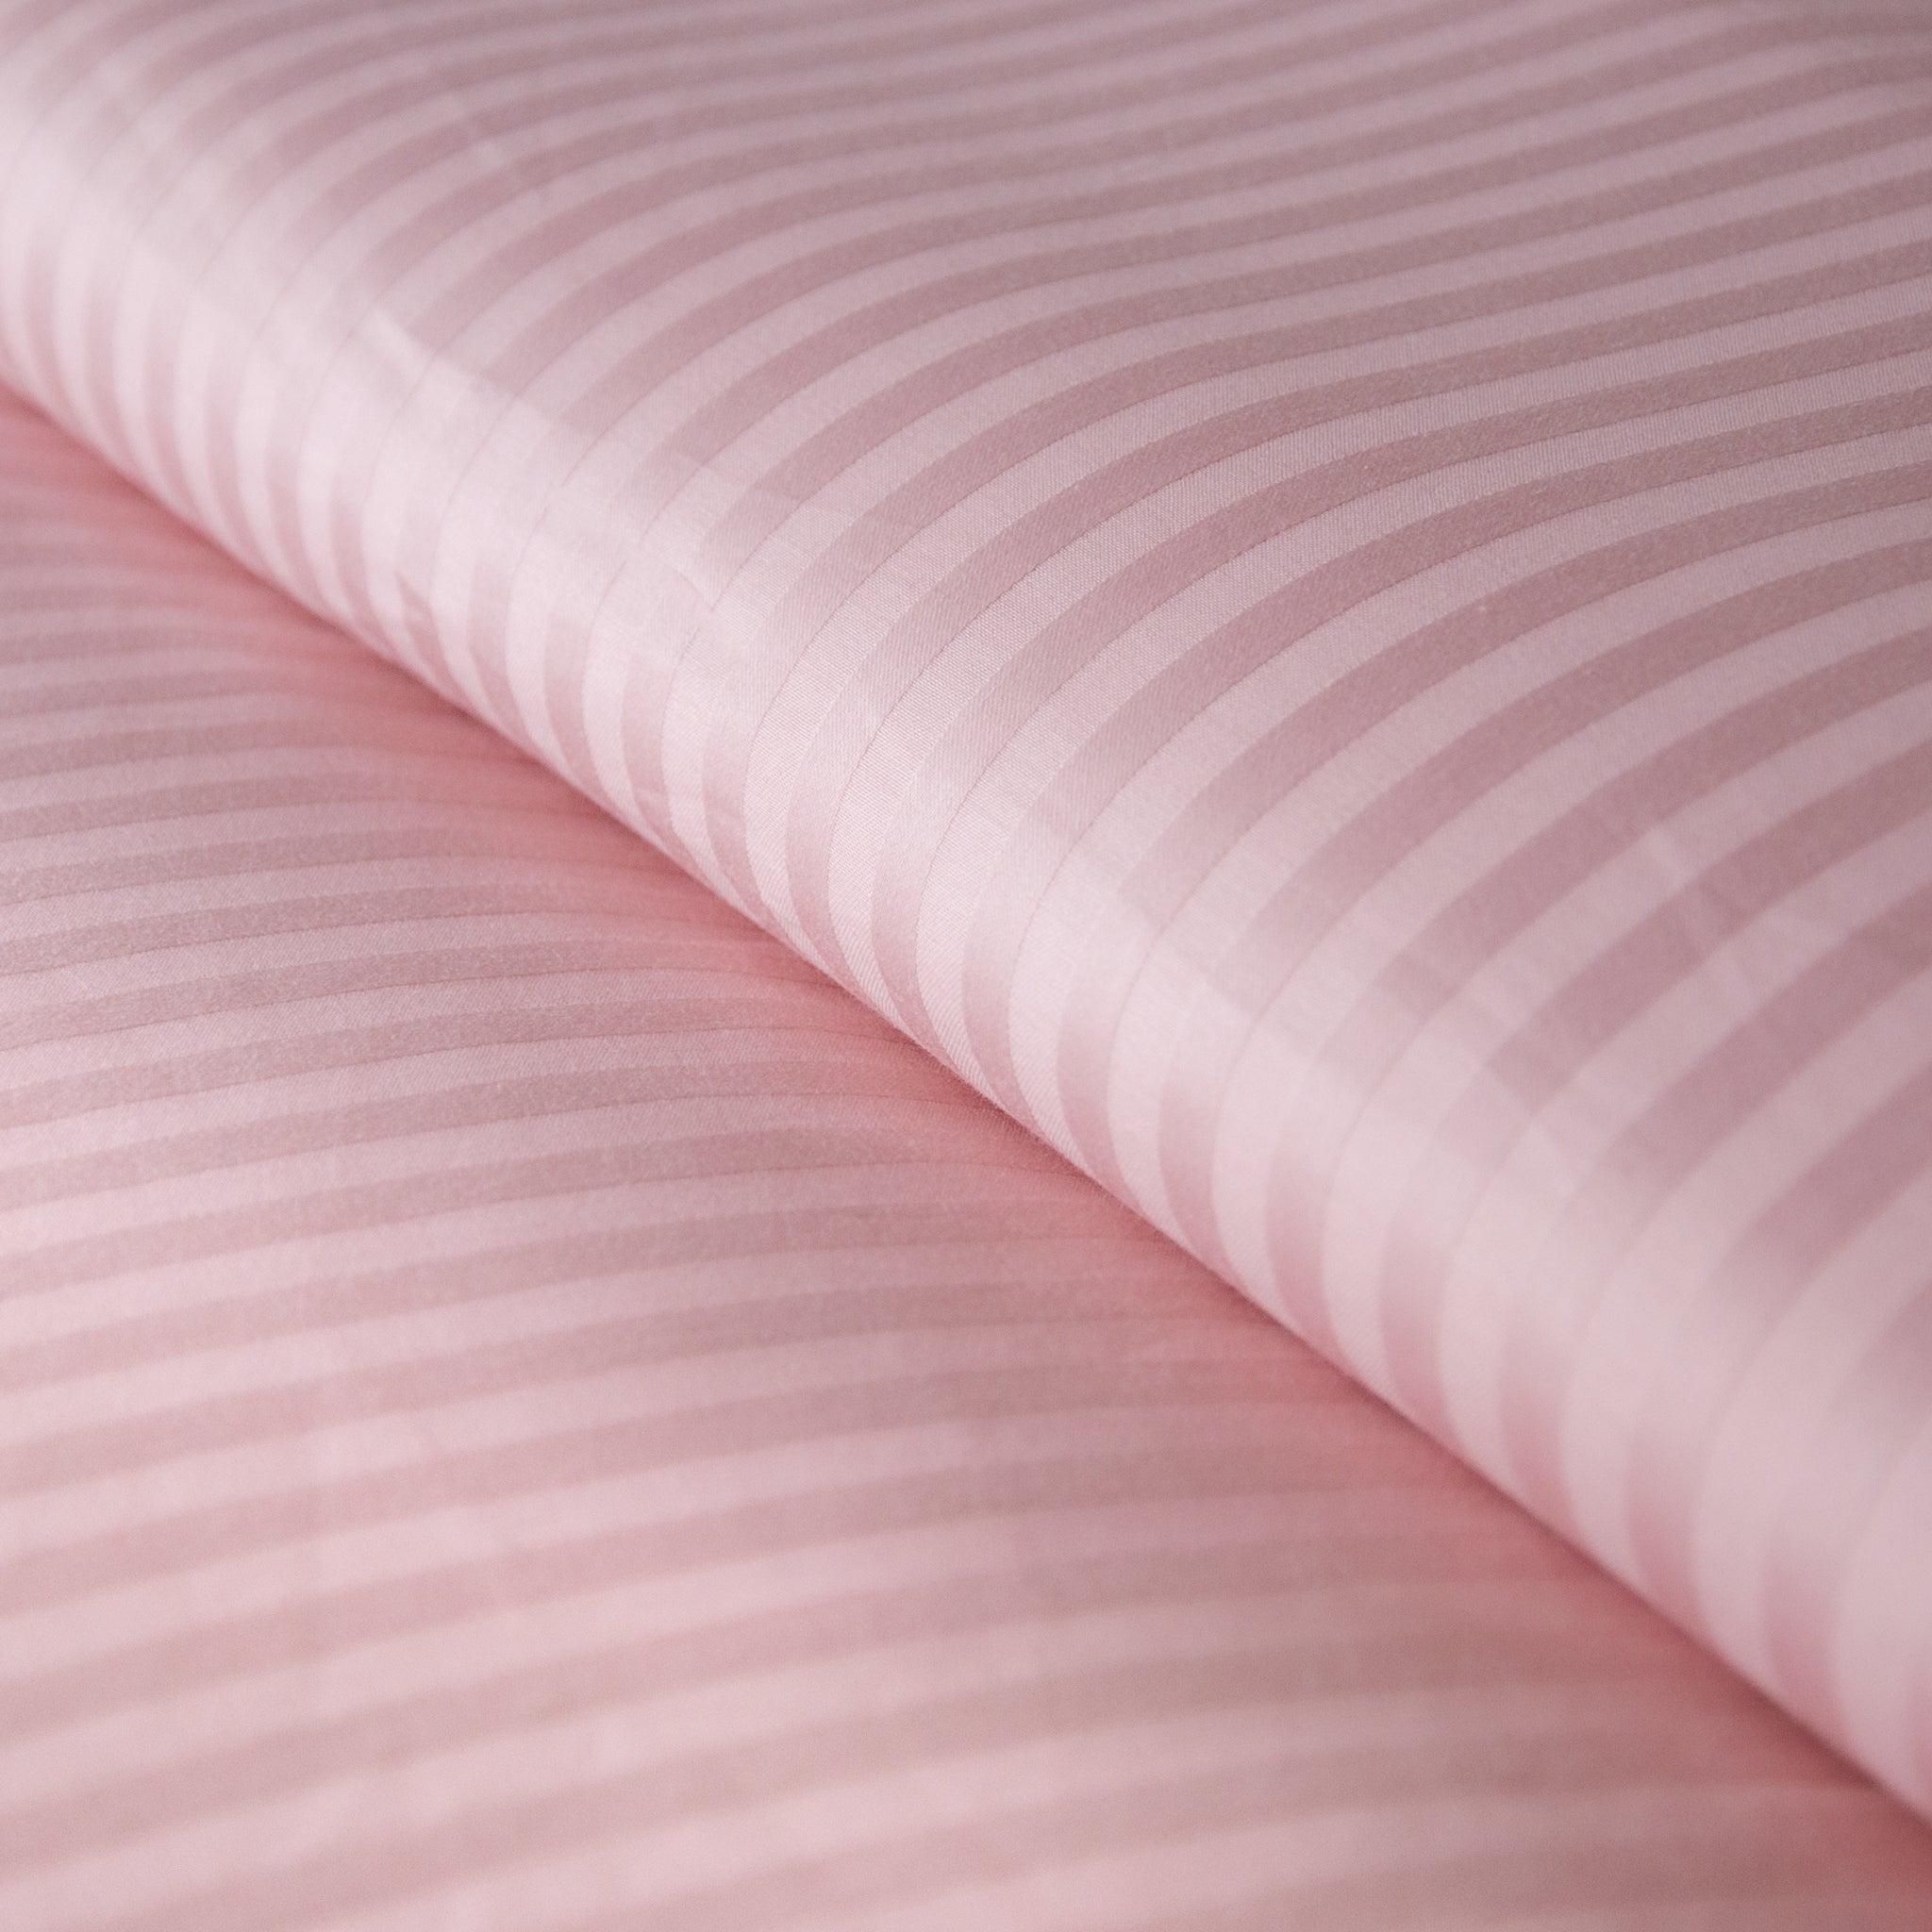 Blush Striped 100% Cotton Sateen Oxford Pillowcase